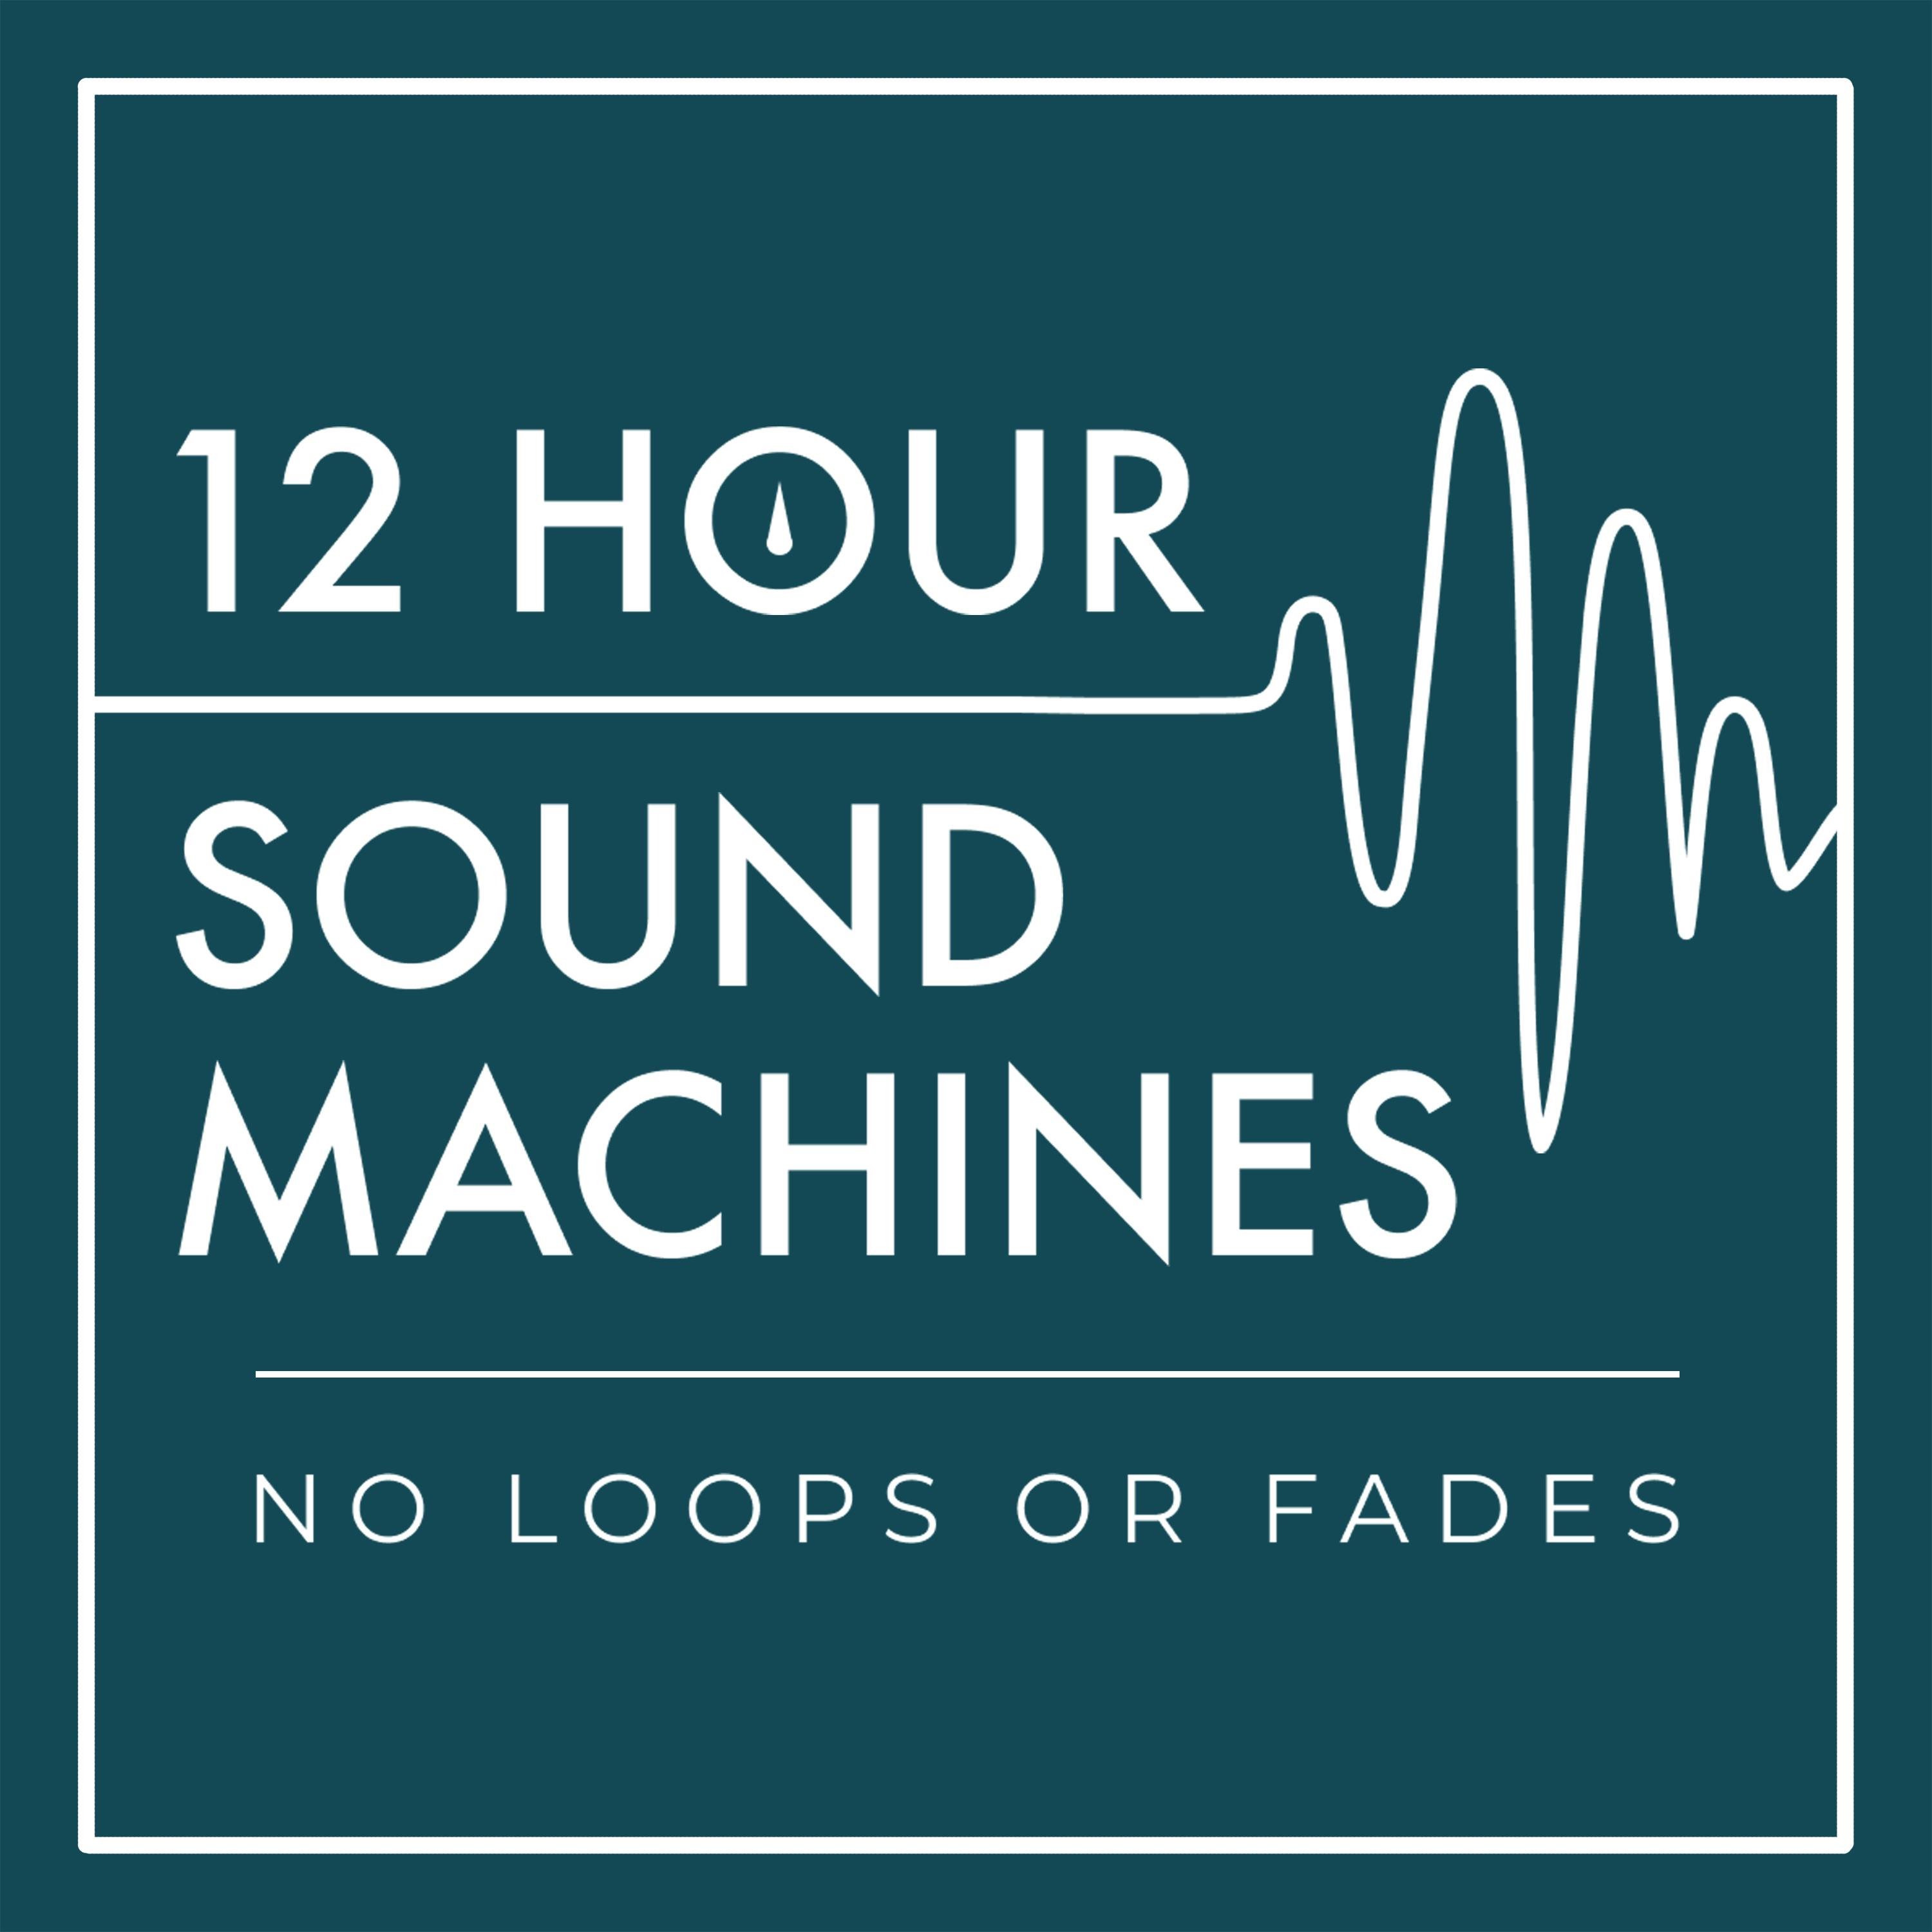 Shhh (Baby Sleep) Sound Machine (12 Hours)